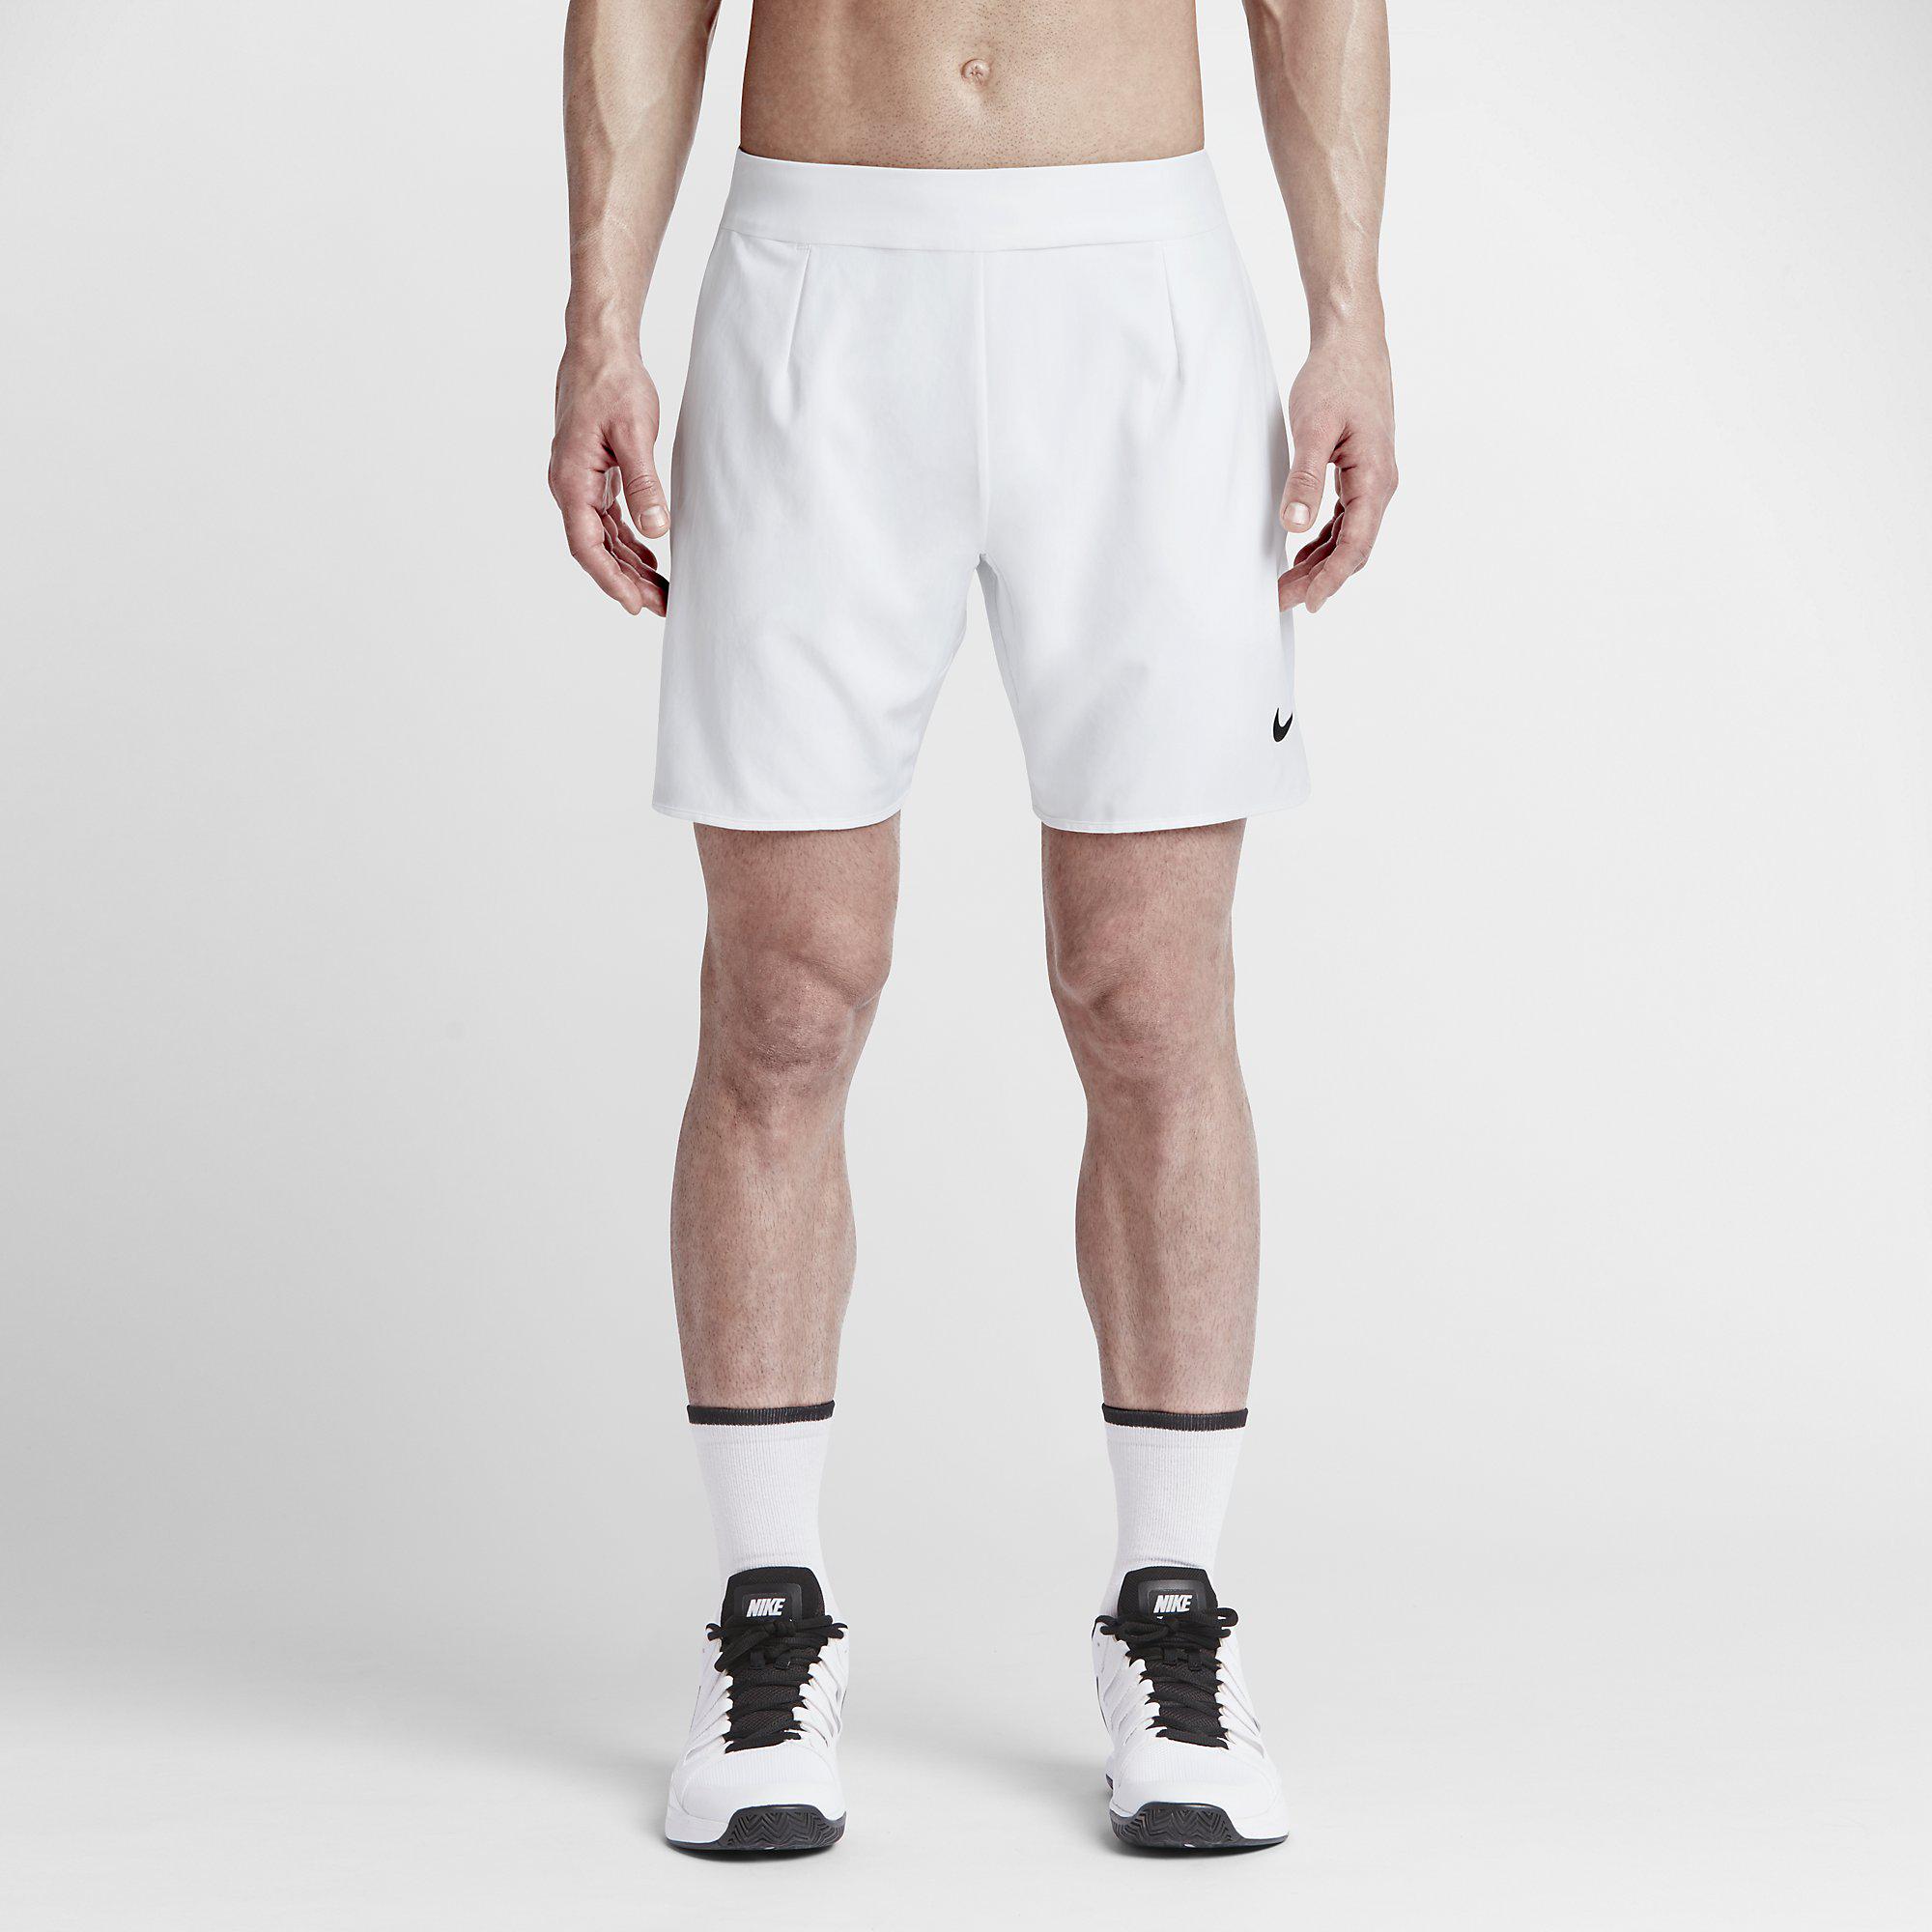 Nike Mens Premier Gladiator 7 Inch Shorts - White/Black - Tennisnuts.com